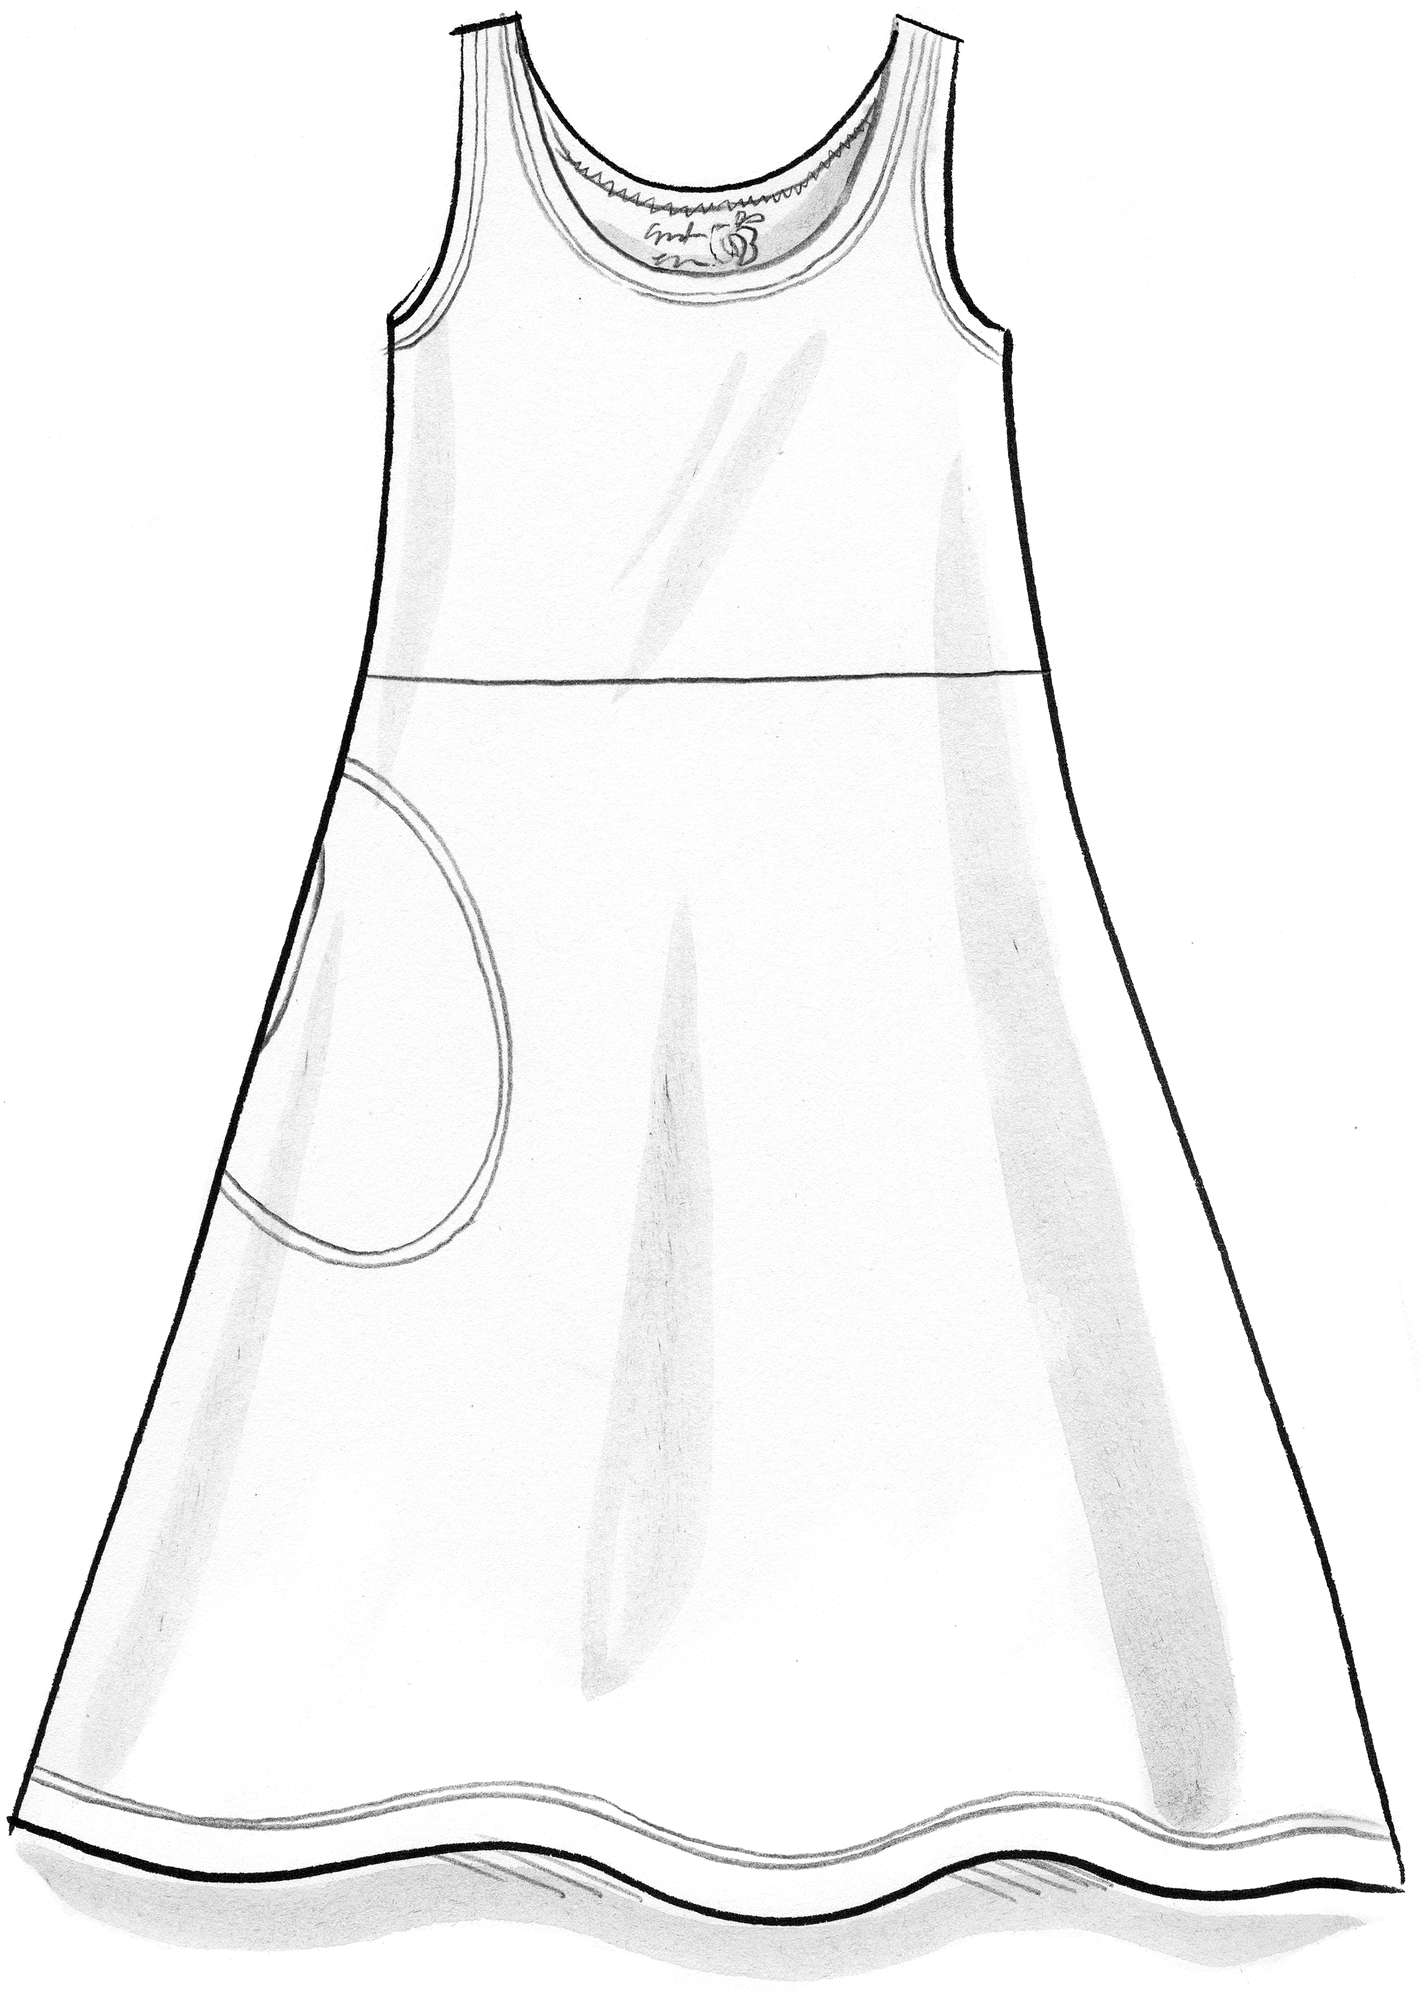 Tricot jurk  Pytte  van biologisch katoen/modal/elastaan